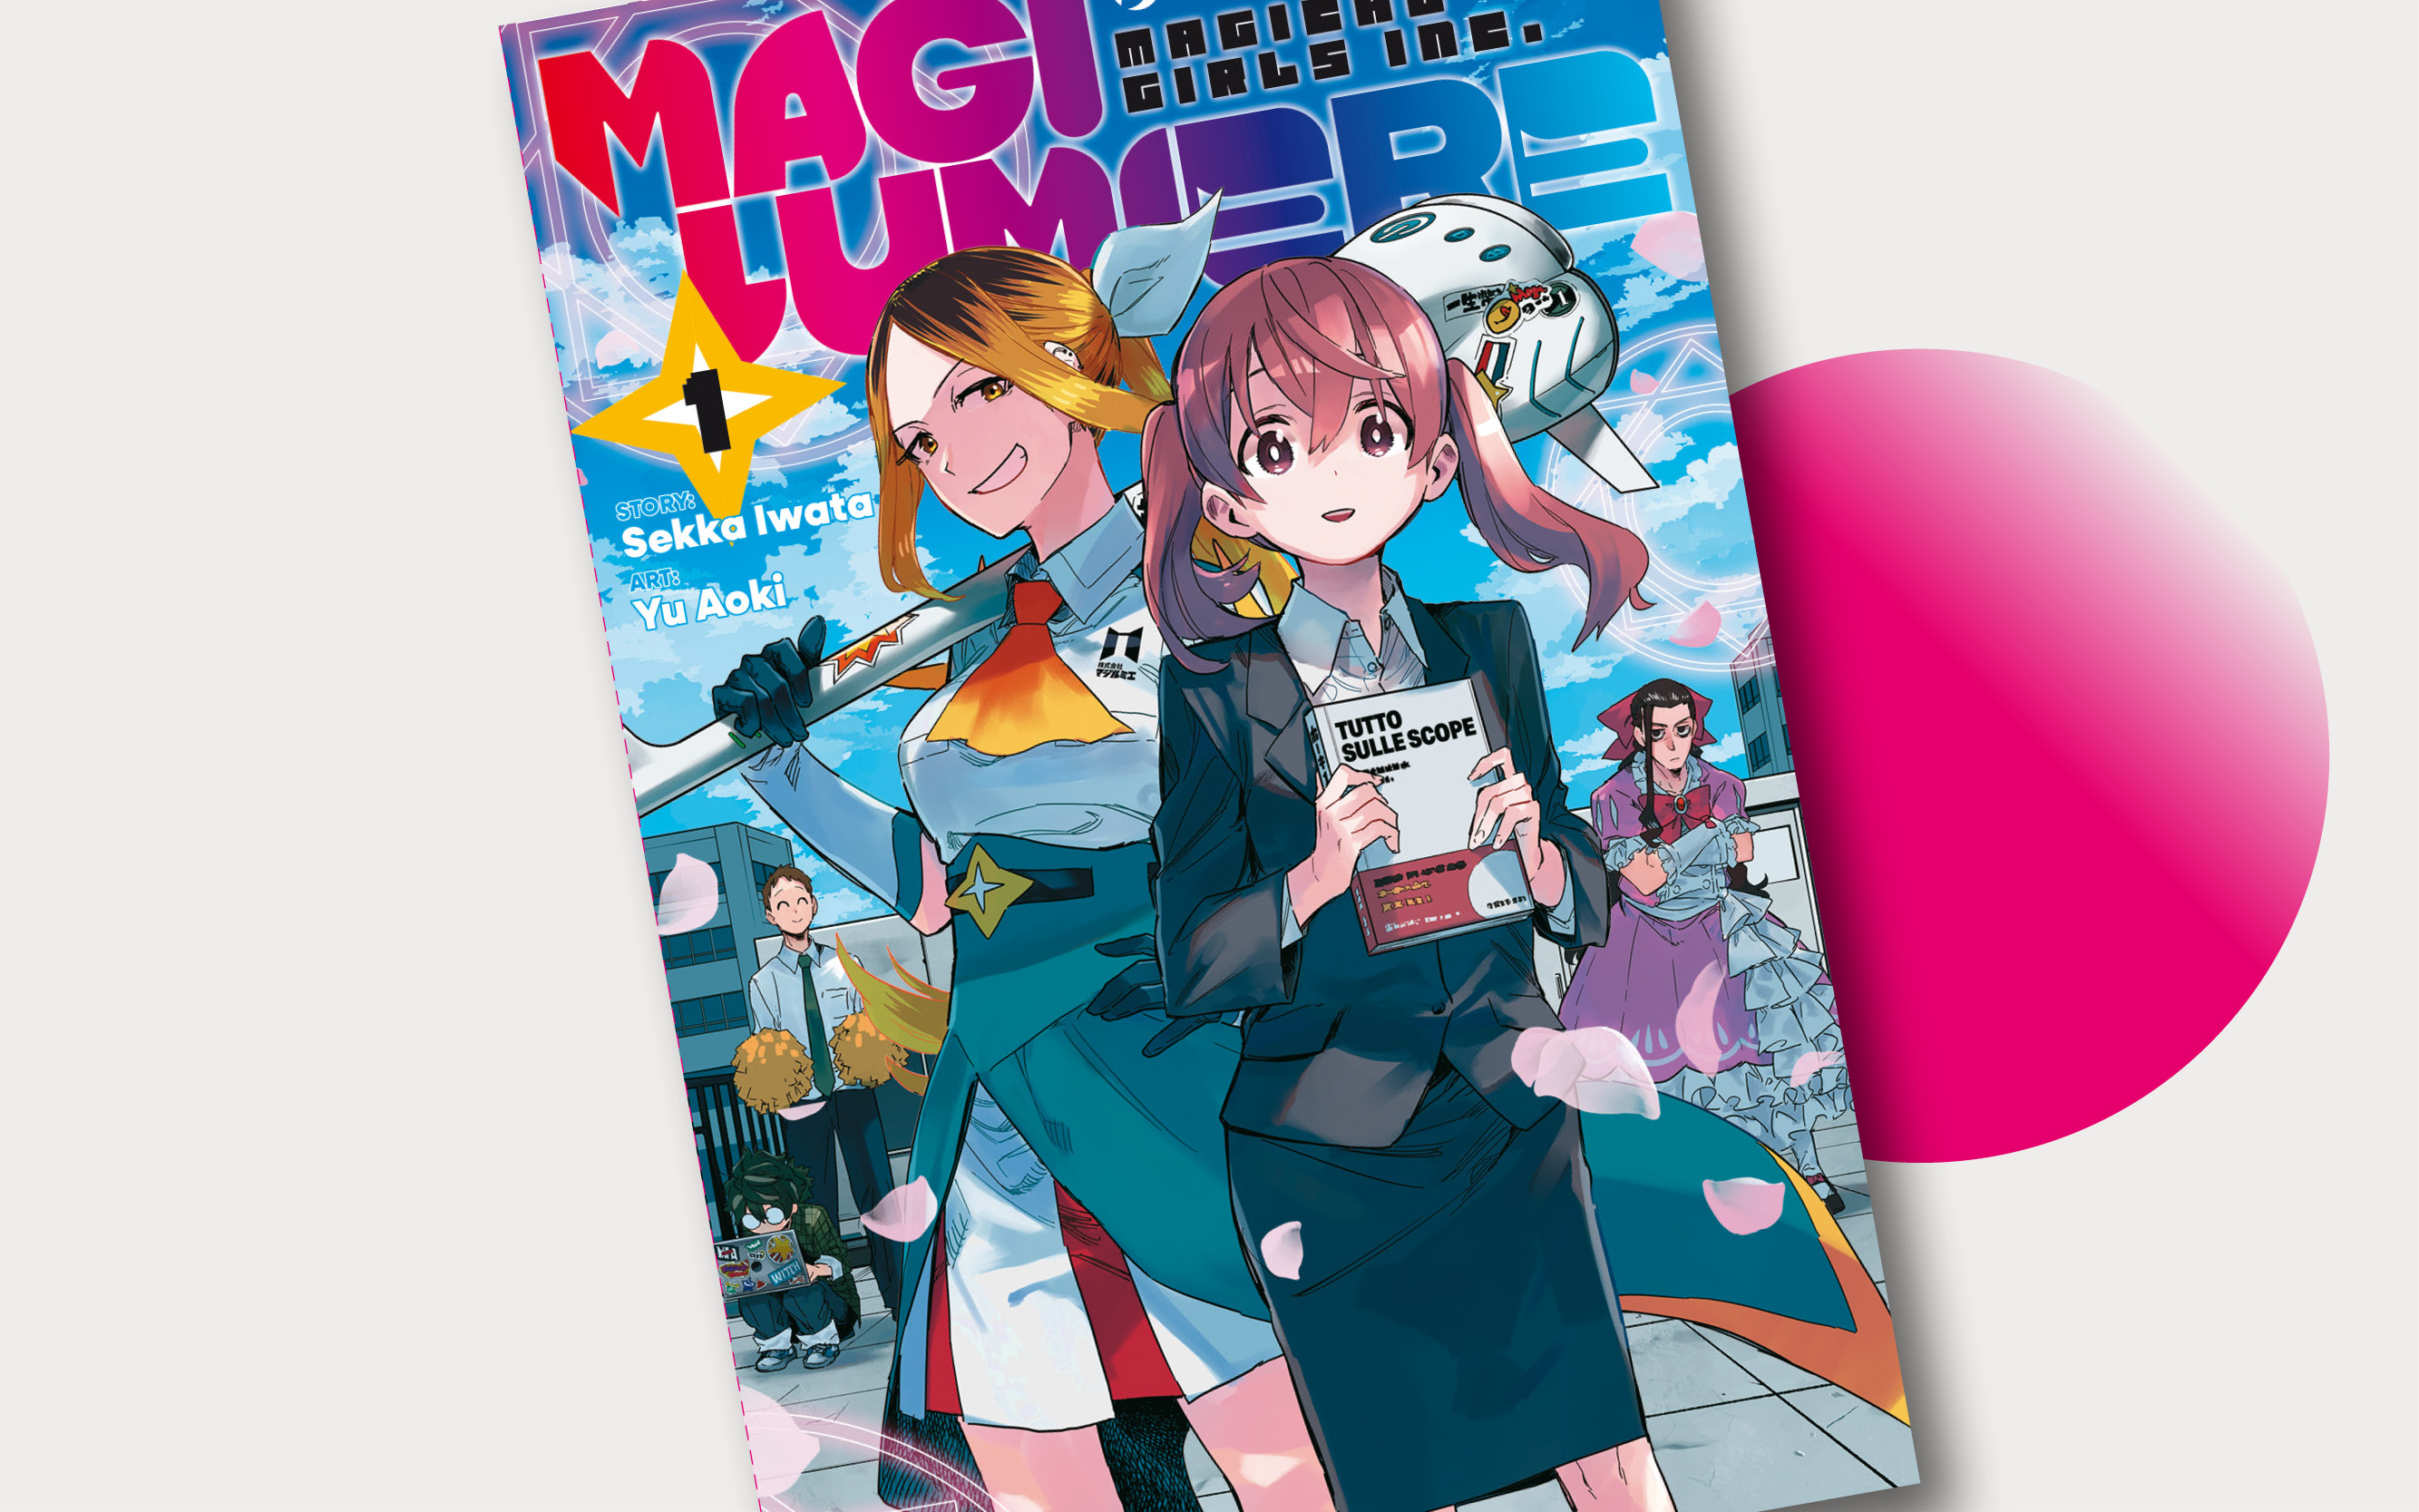 J-POP Manga presenta Magilumiere – Magical Girls Inc. di Sekka Iwata e Yu Aoki